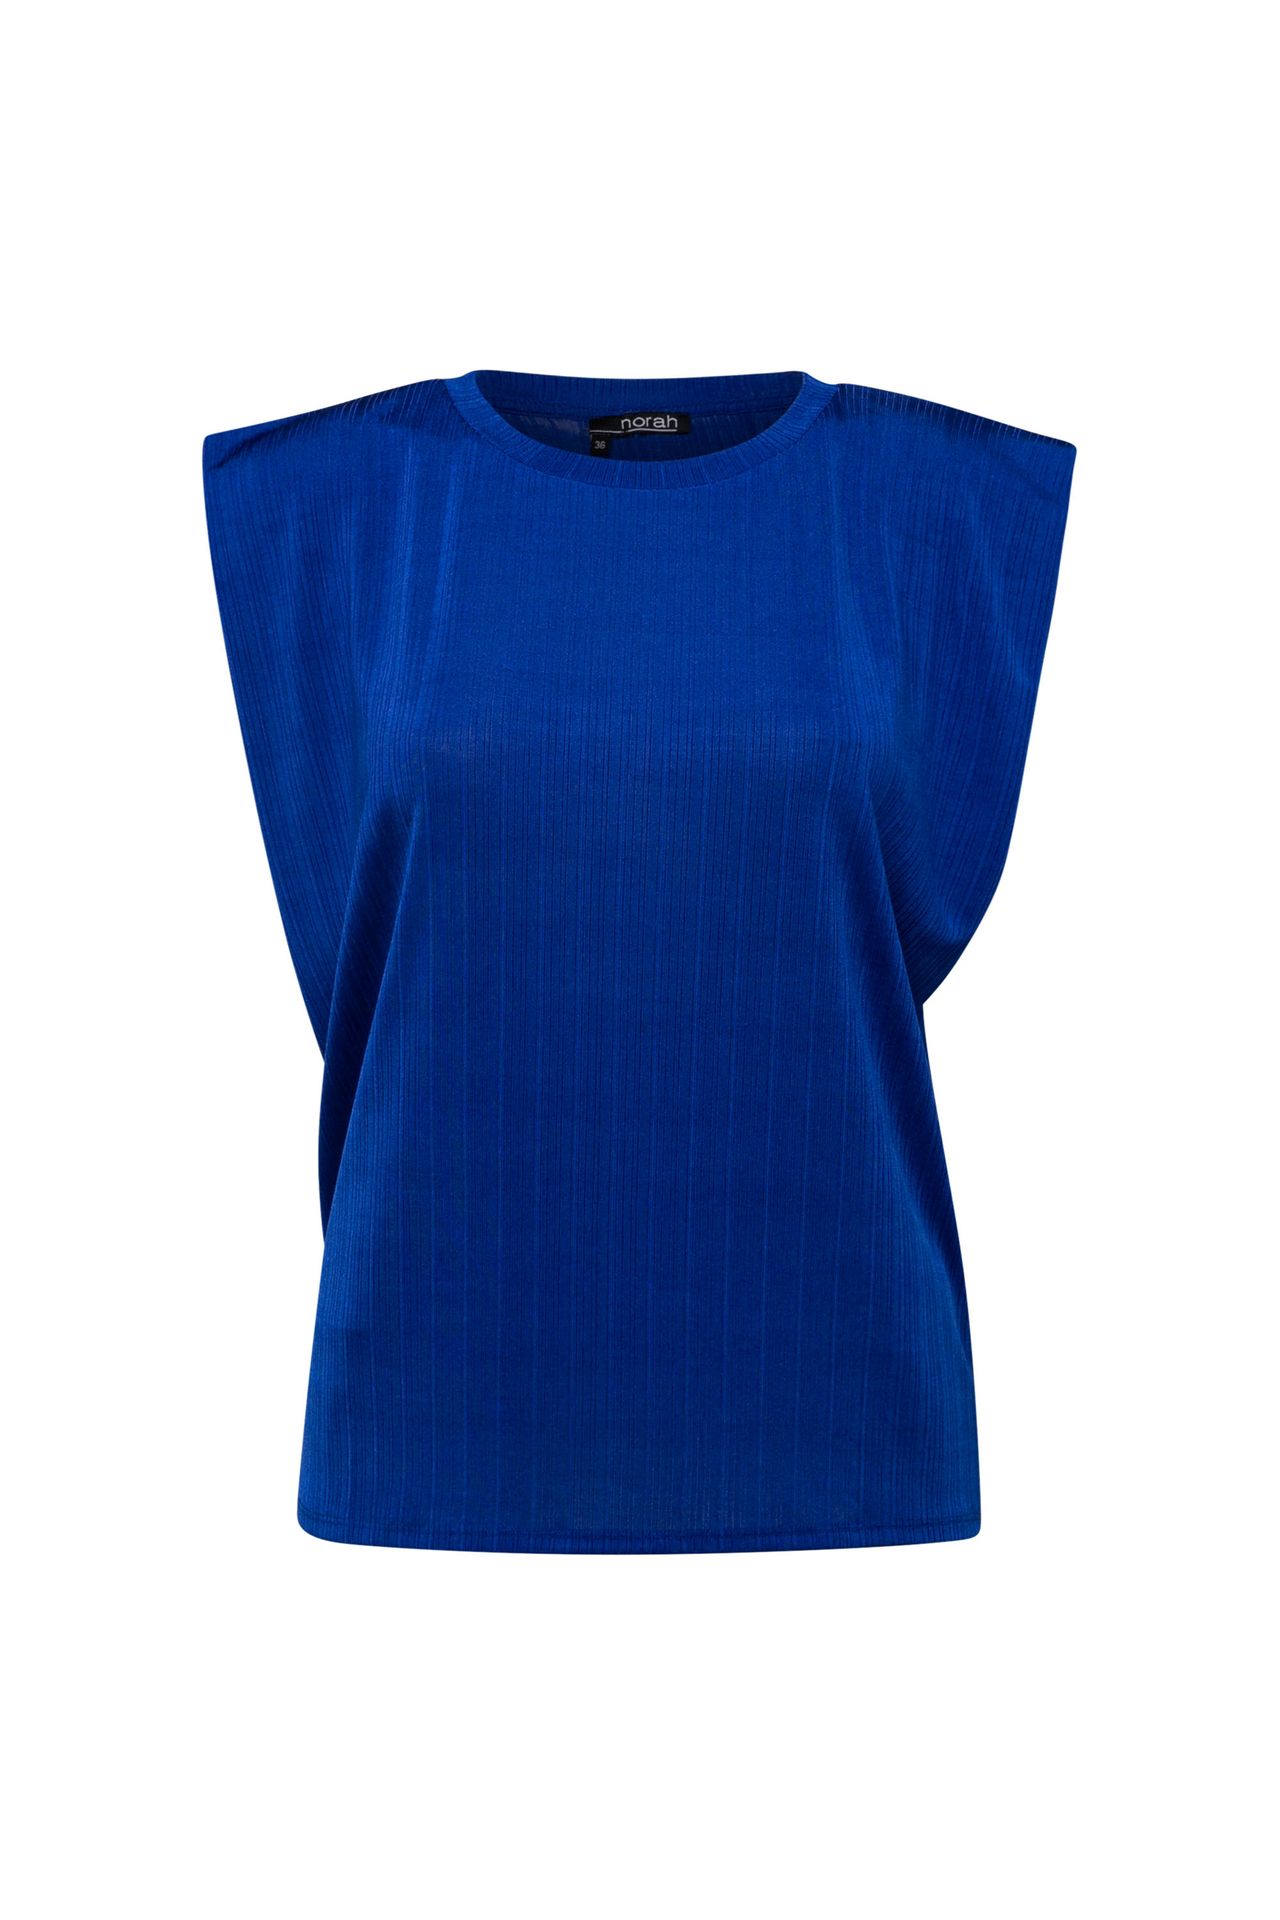  Kobaltblauw shirt cobalt 213826-468-46